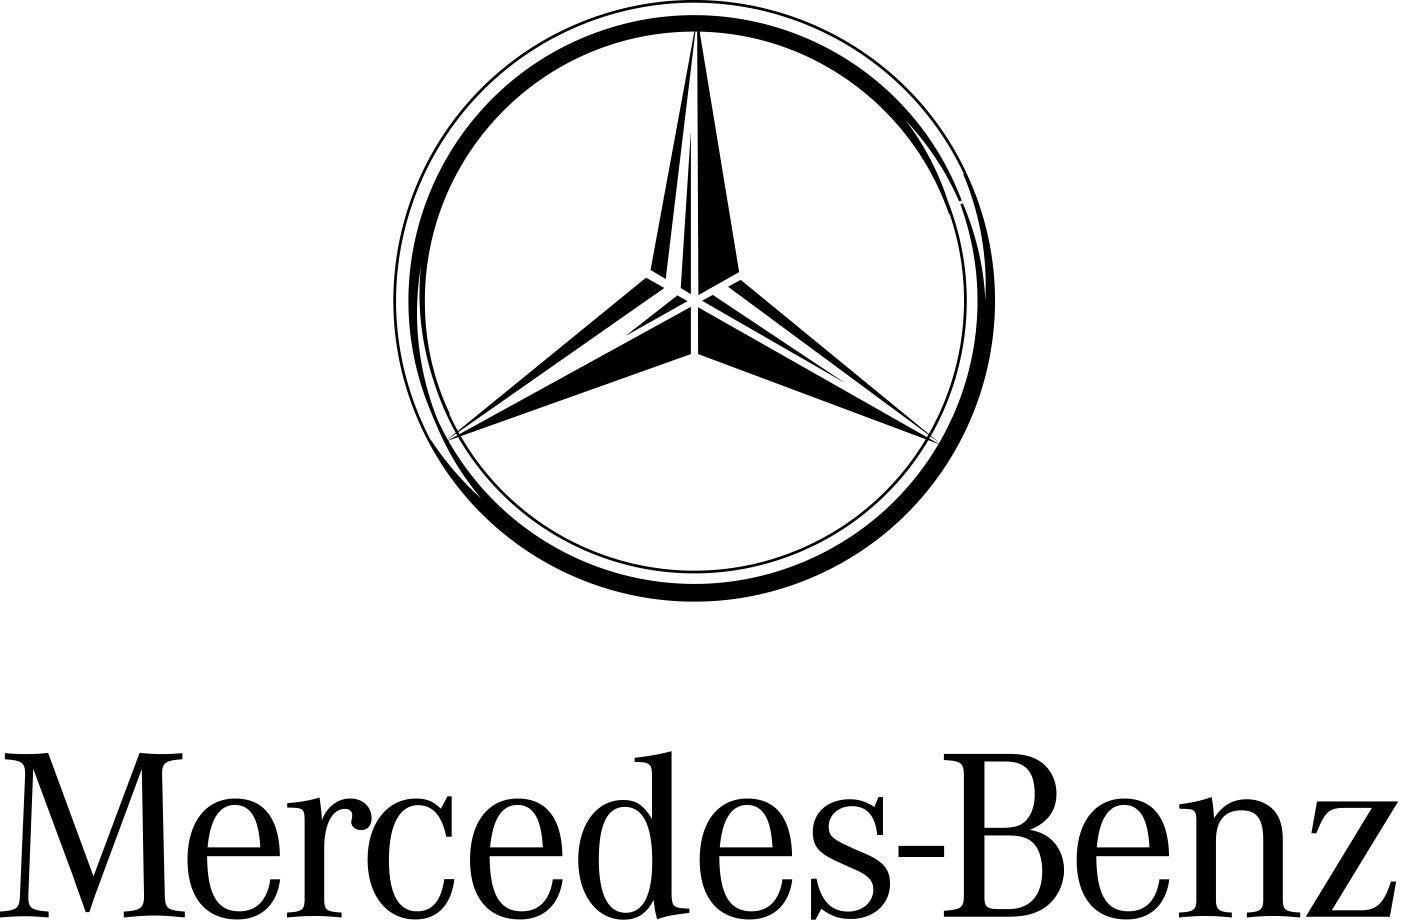 Benz Trucks Logo - Mercedes-Benz Trucks Announces Efficient New Axle Technology | Truck ...